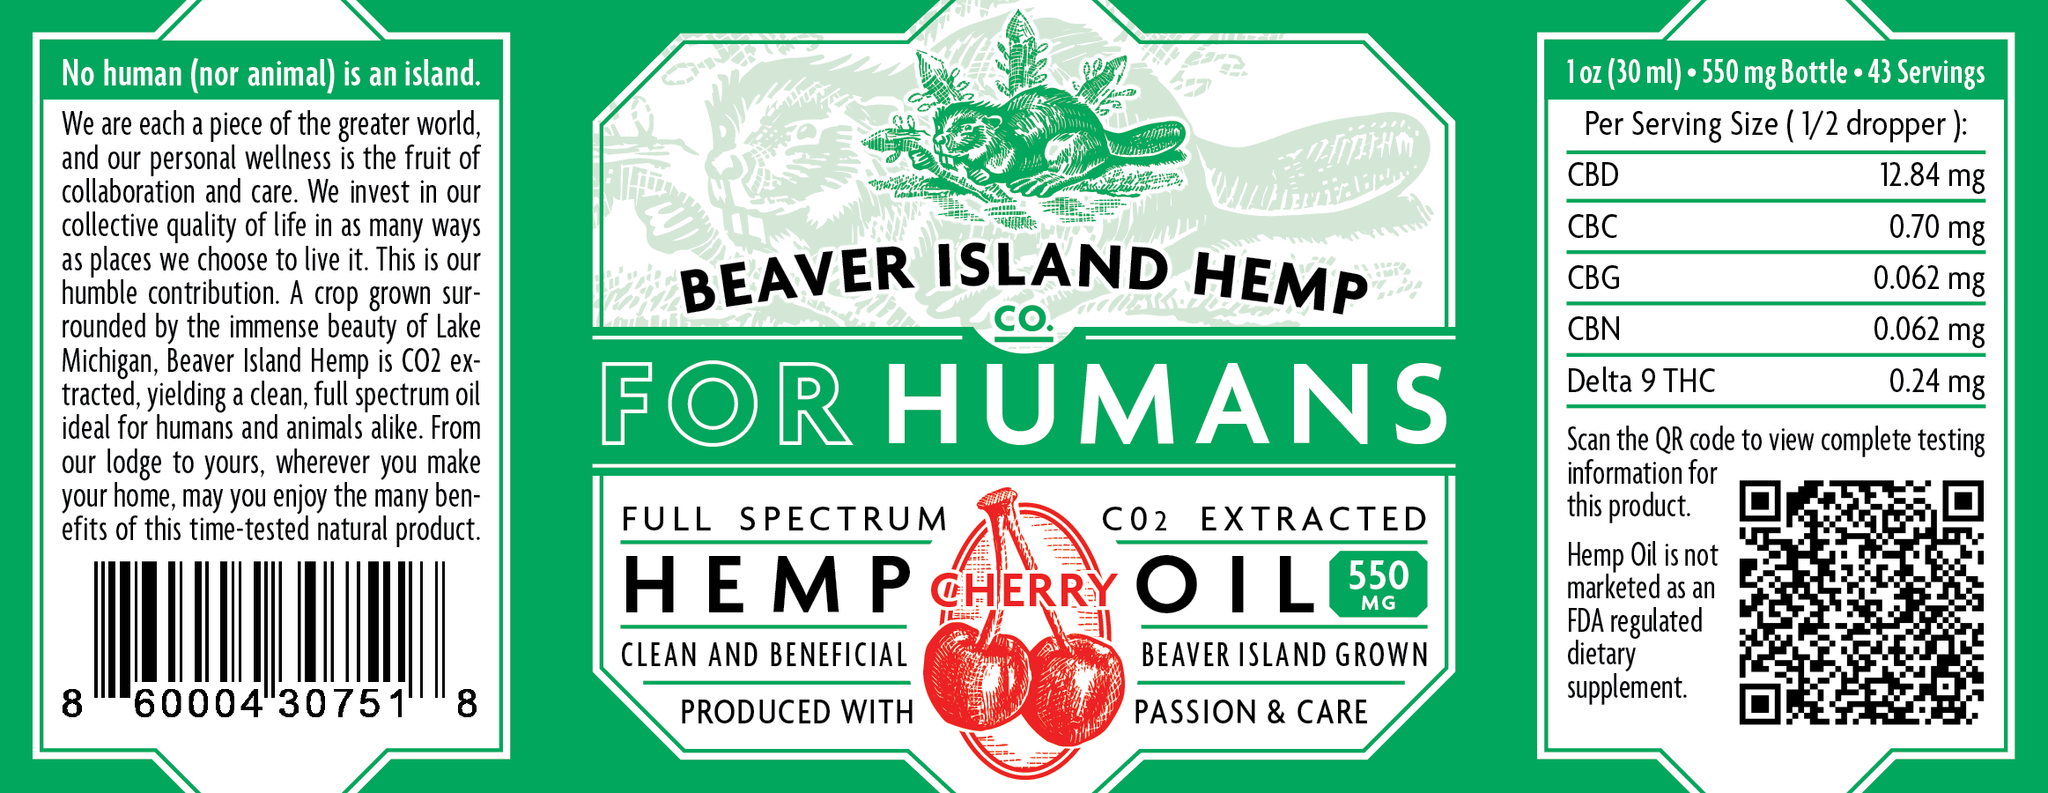 Beaver Island Cherry Hemp Oil for Humans